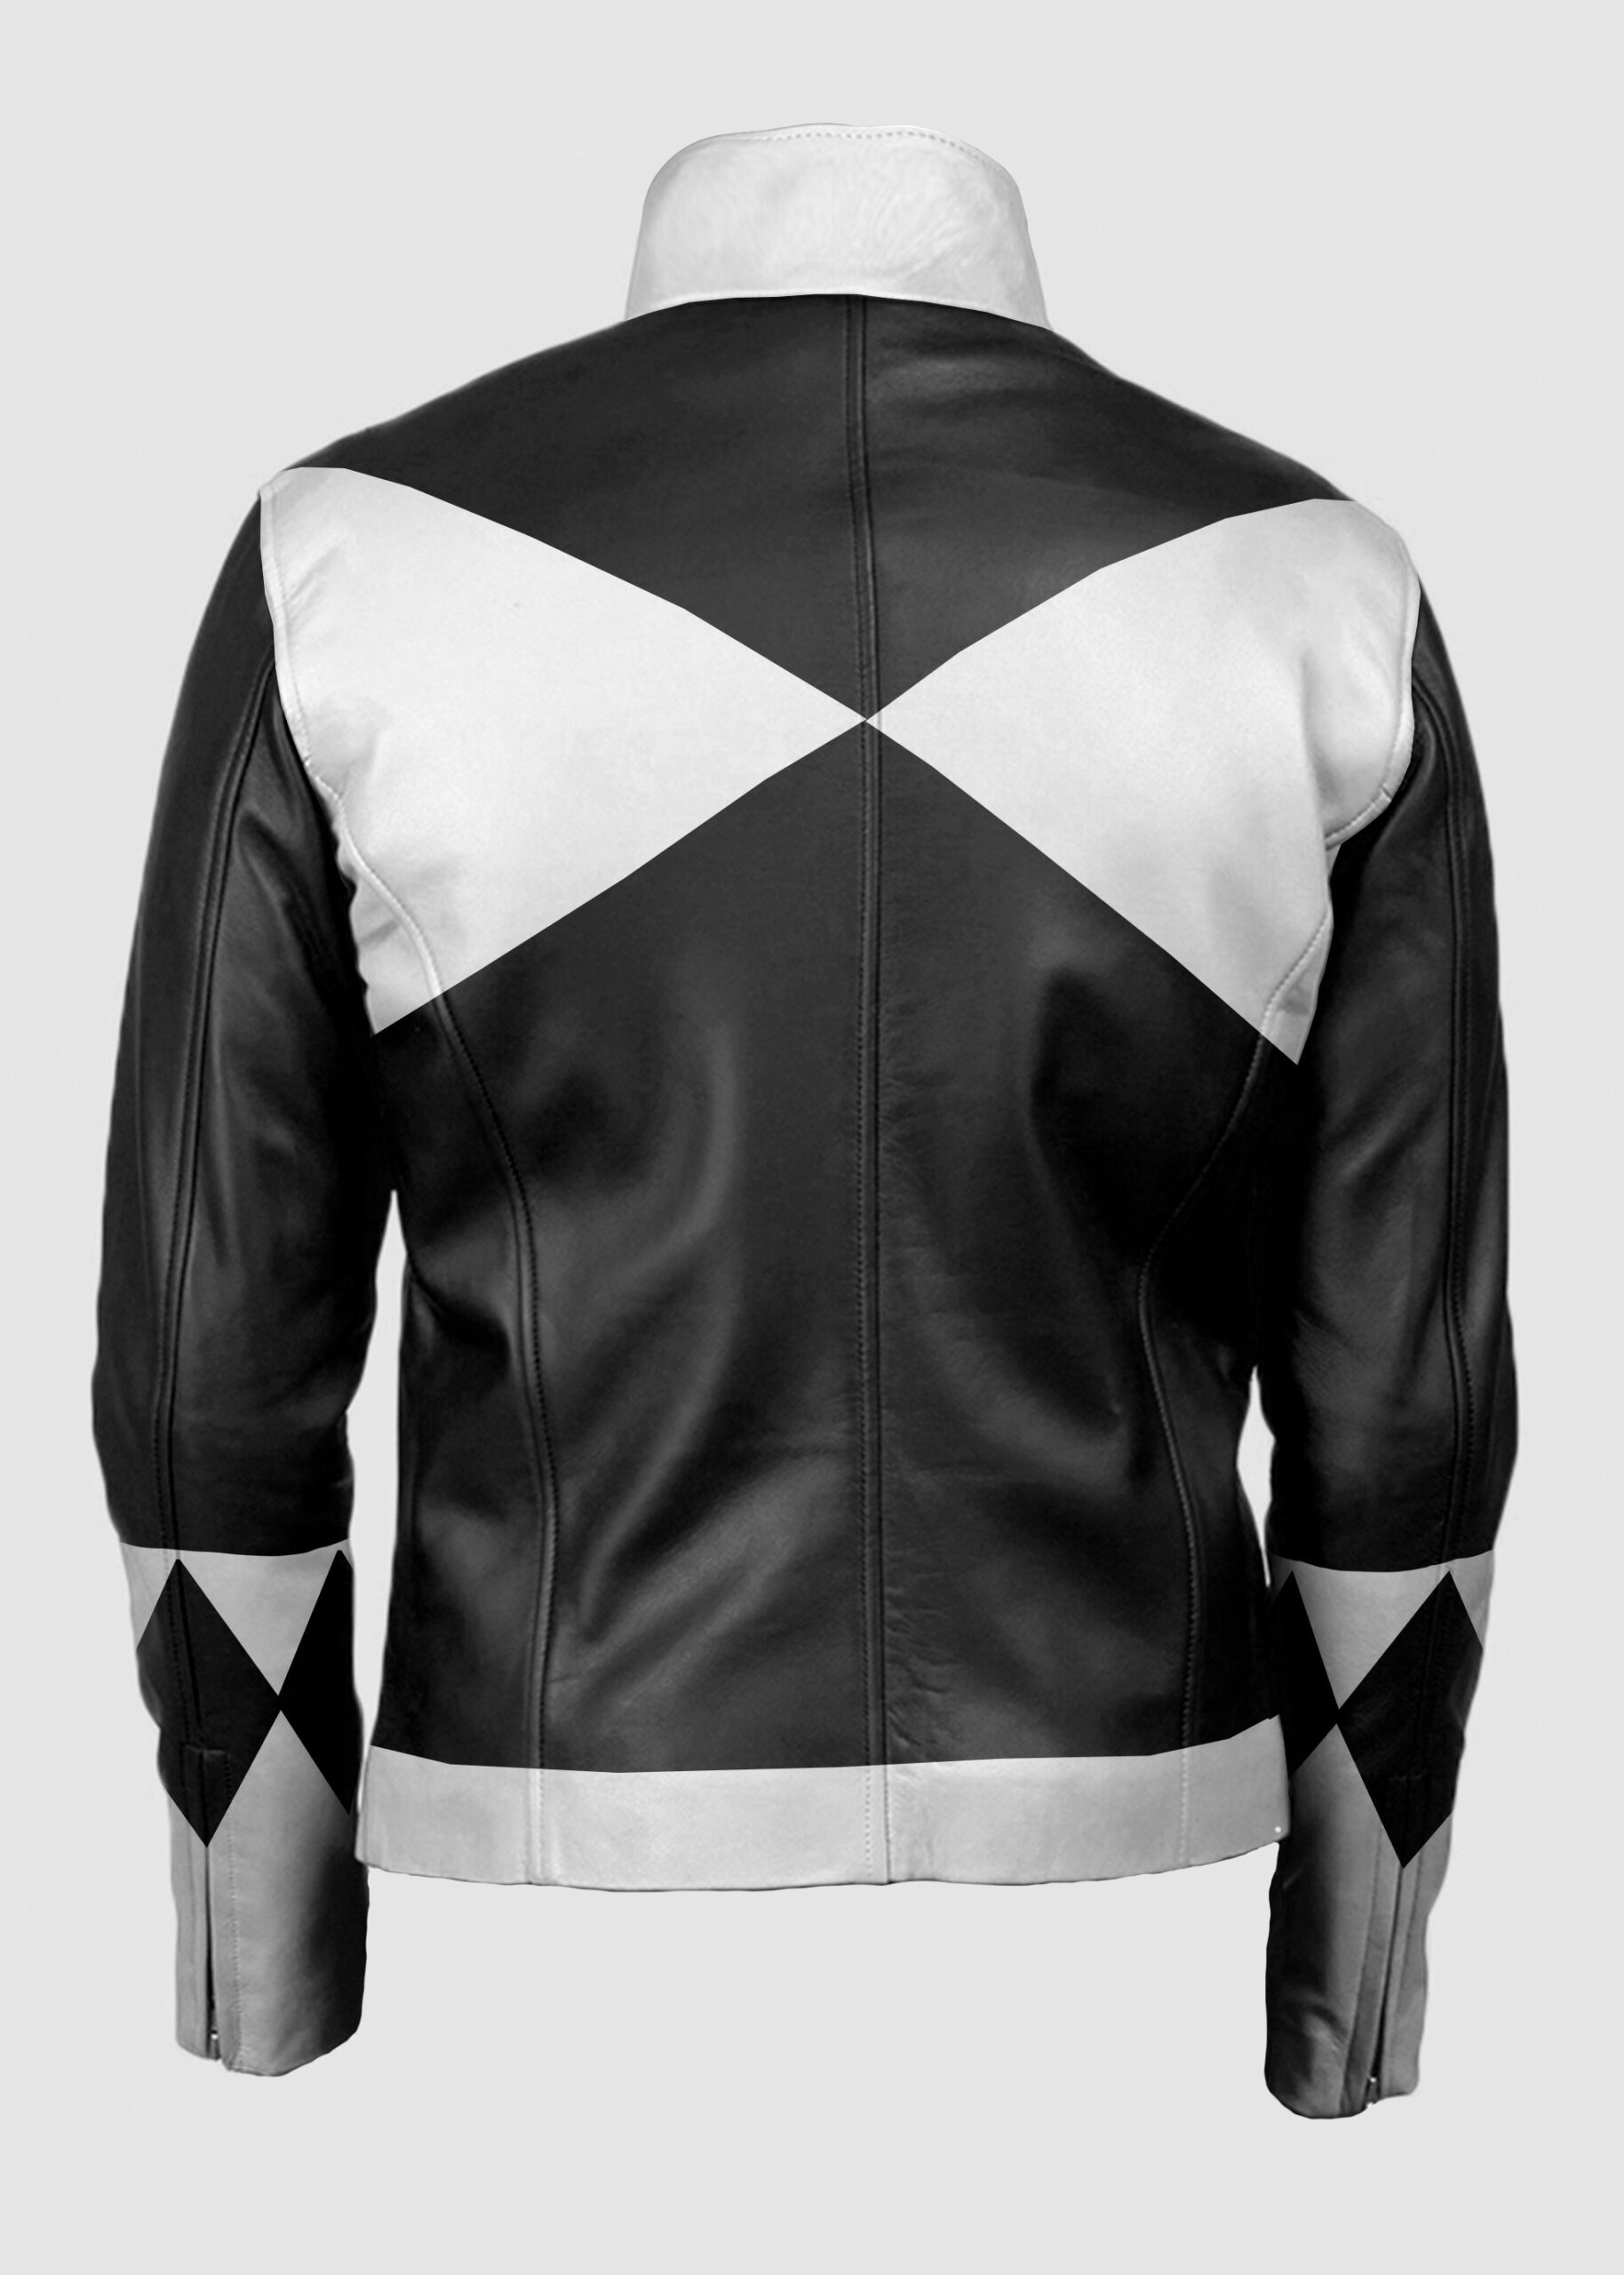 Mens Power Rangers Classic Leather Jacket Black